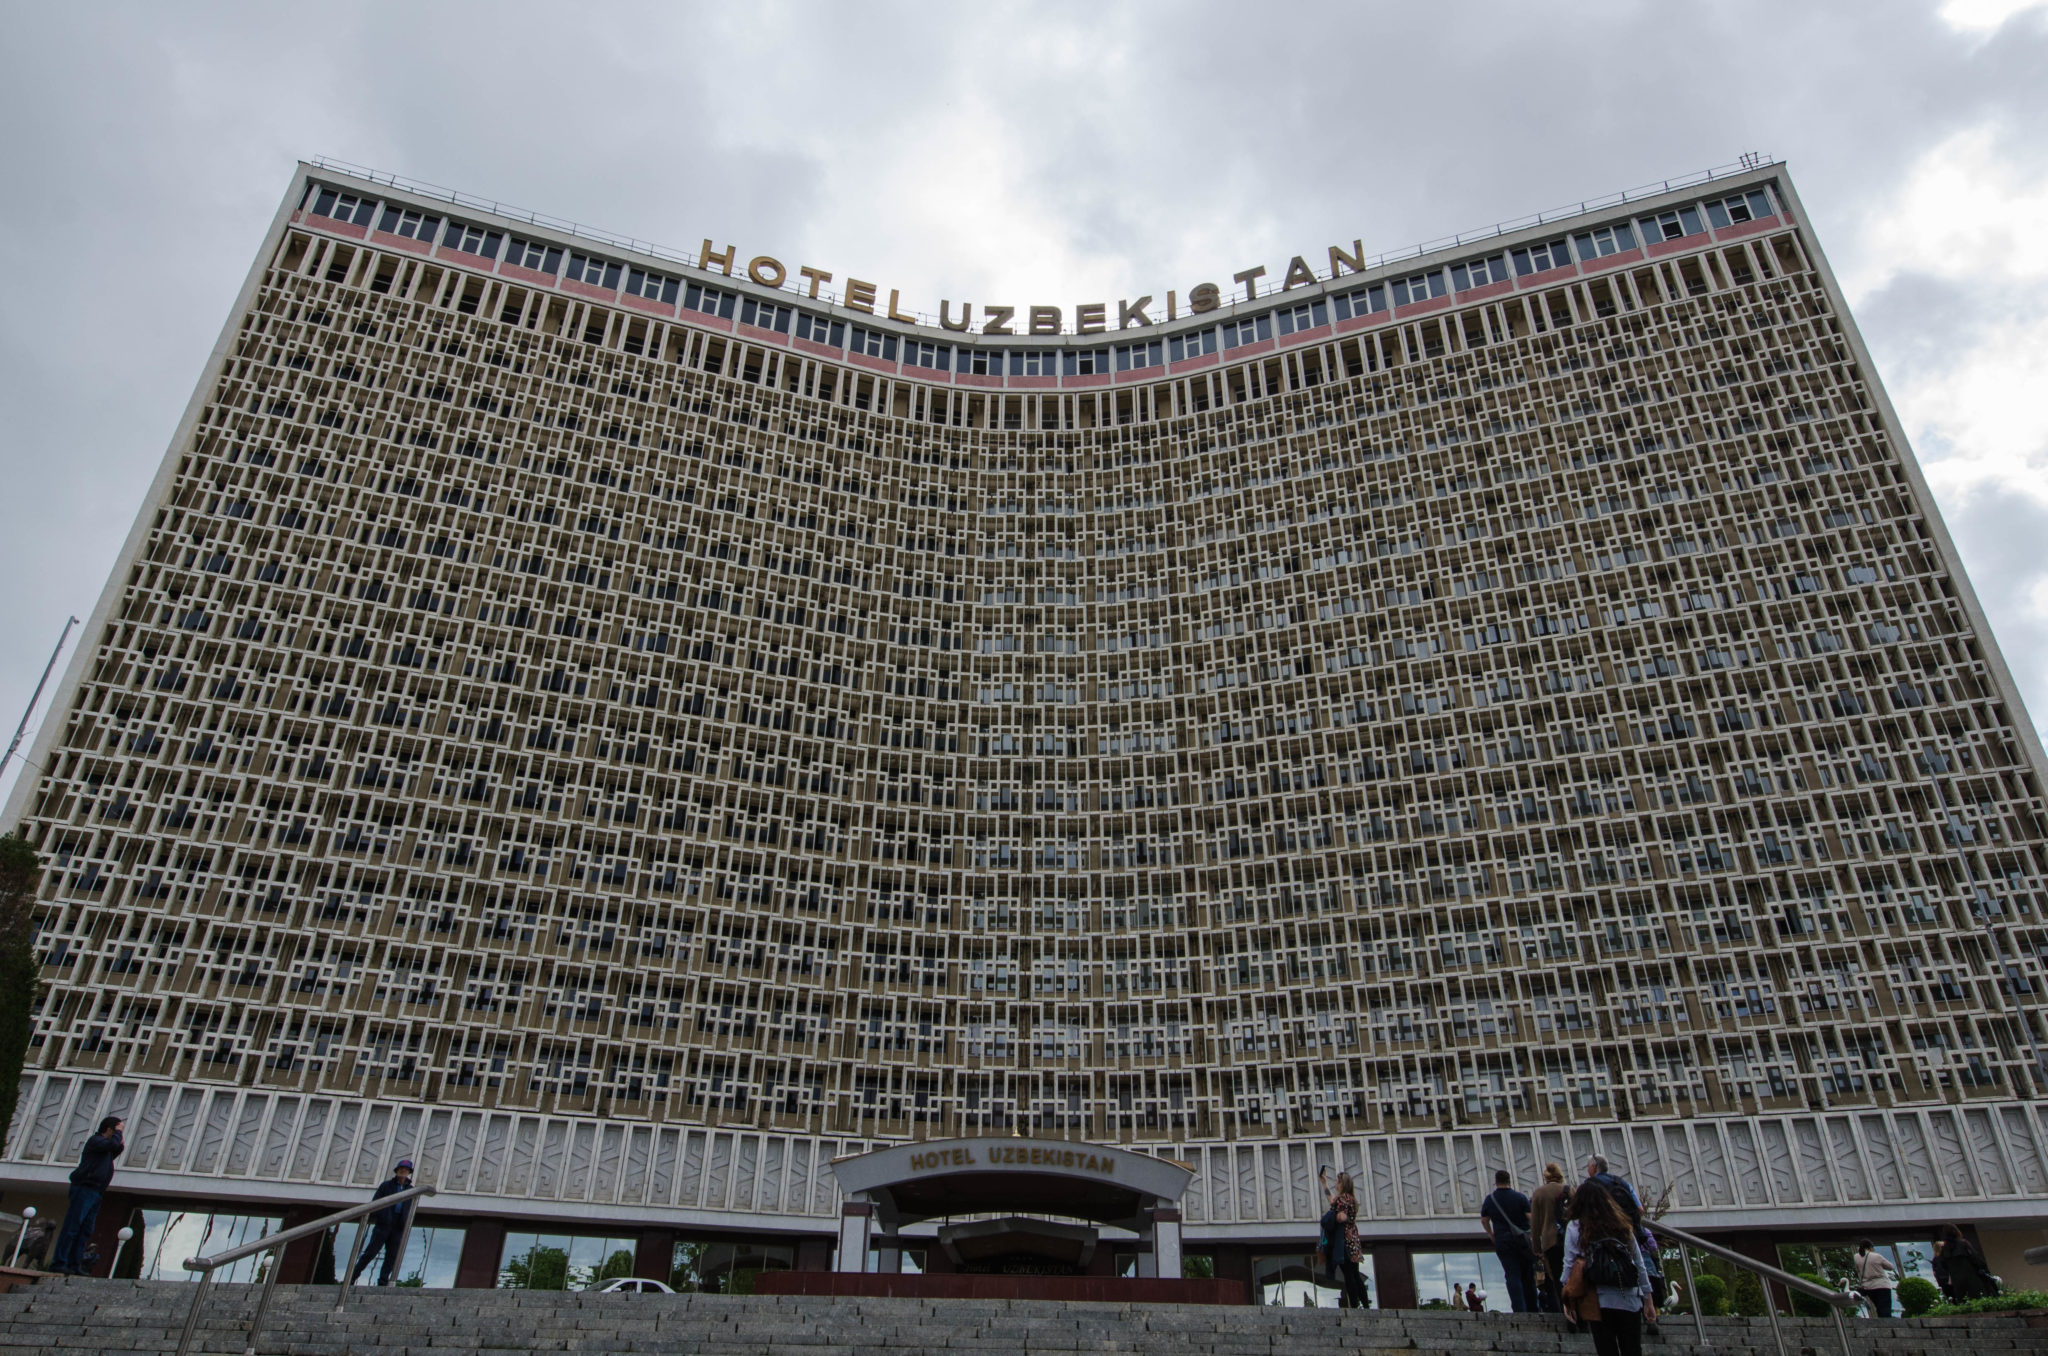 Das legendäre Hotel Uzbekistan